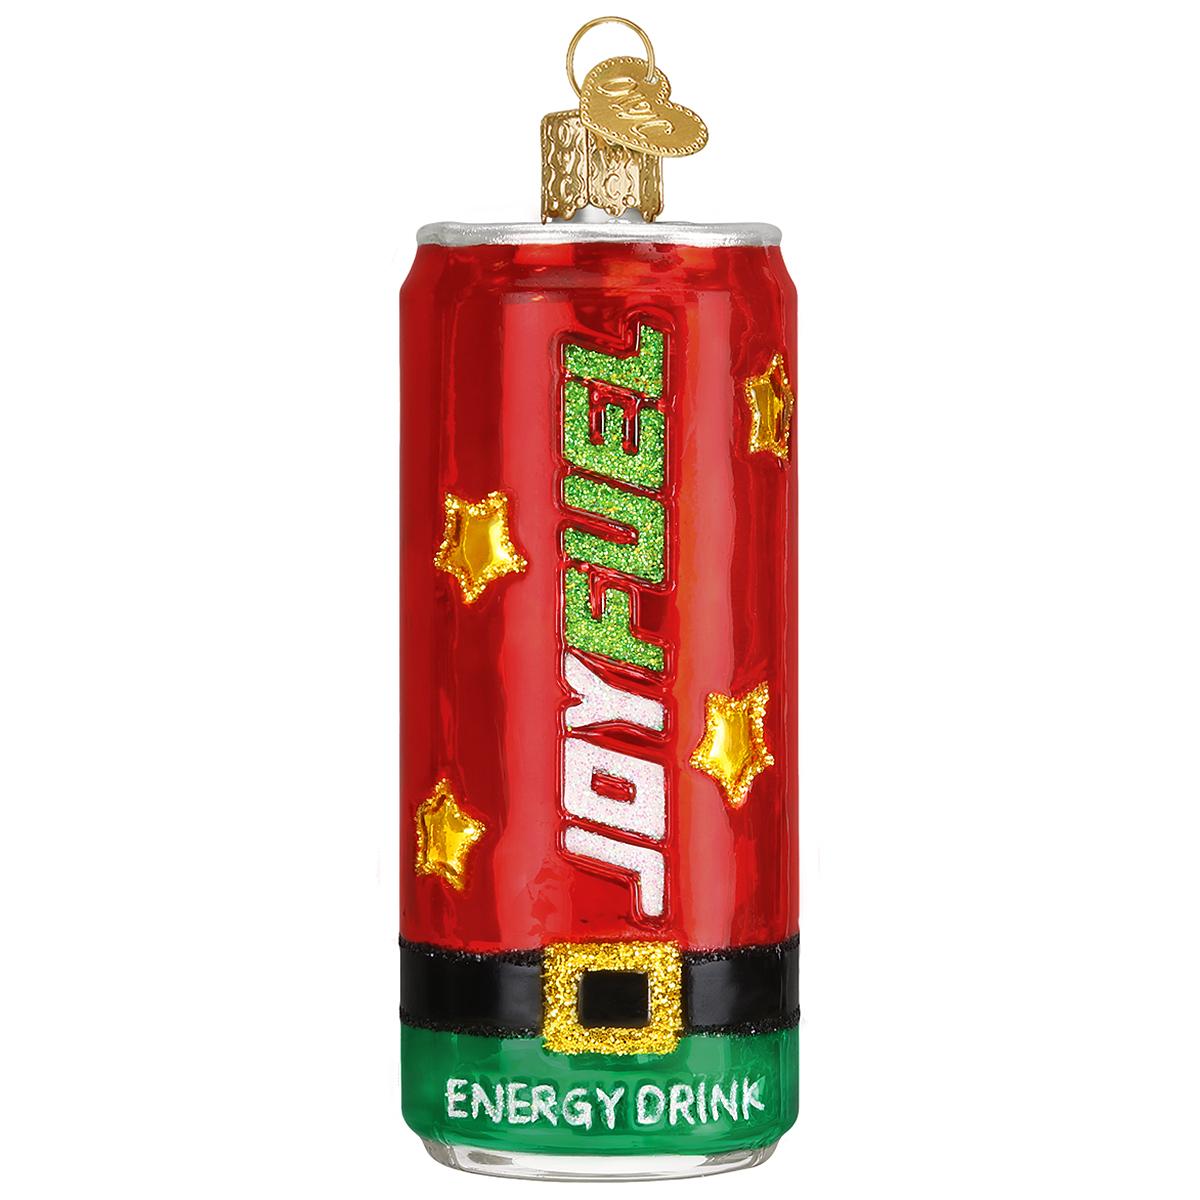 Joyfuel Energy Drink Glass Ornament